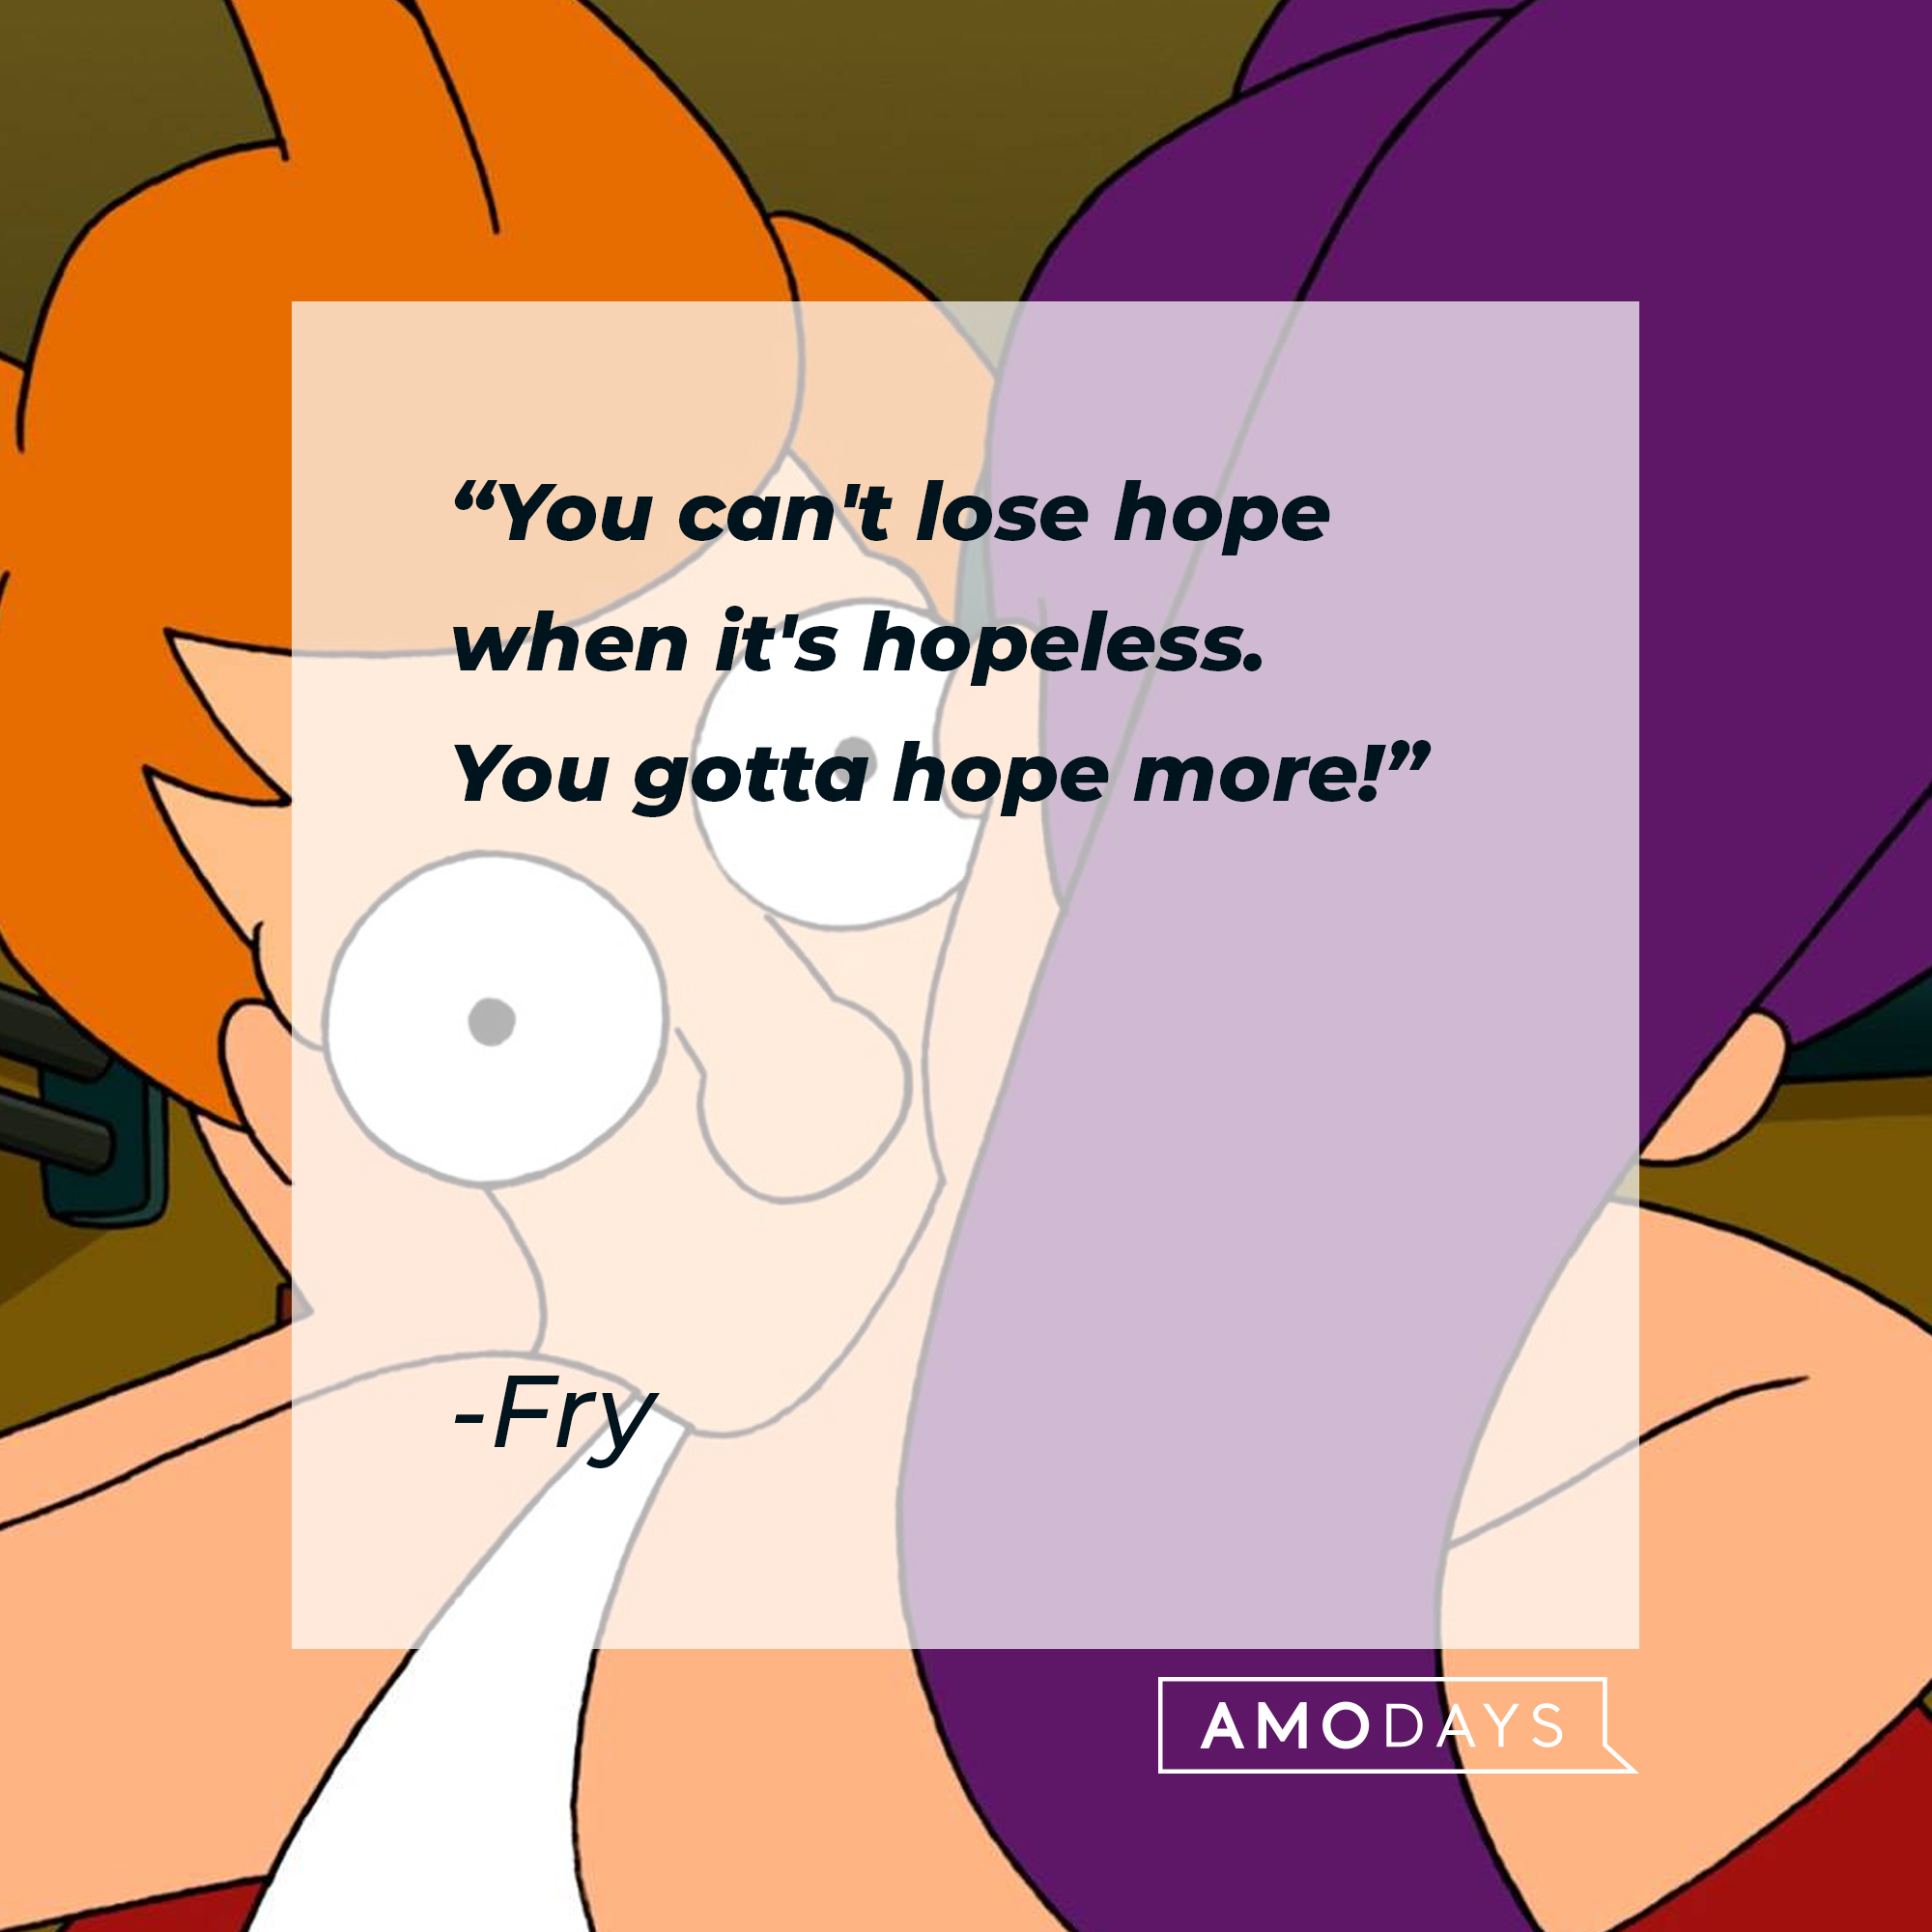 Fry Futurama's quote: "You can't lose hope when it's hopeless. You gotta hope more." | Source: Facebook.com/Futurama